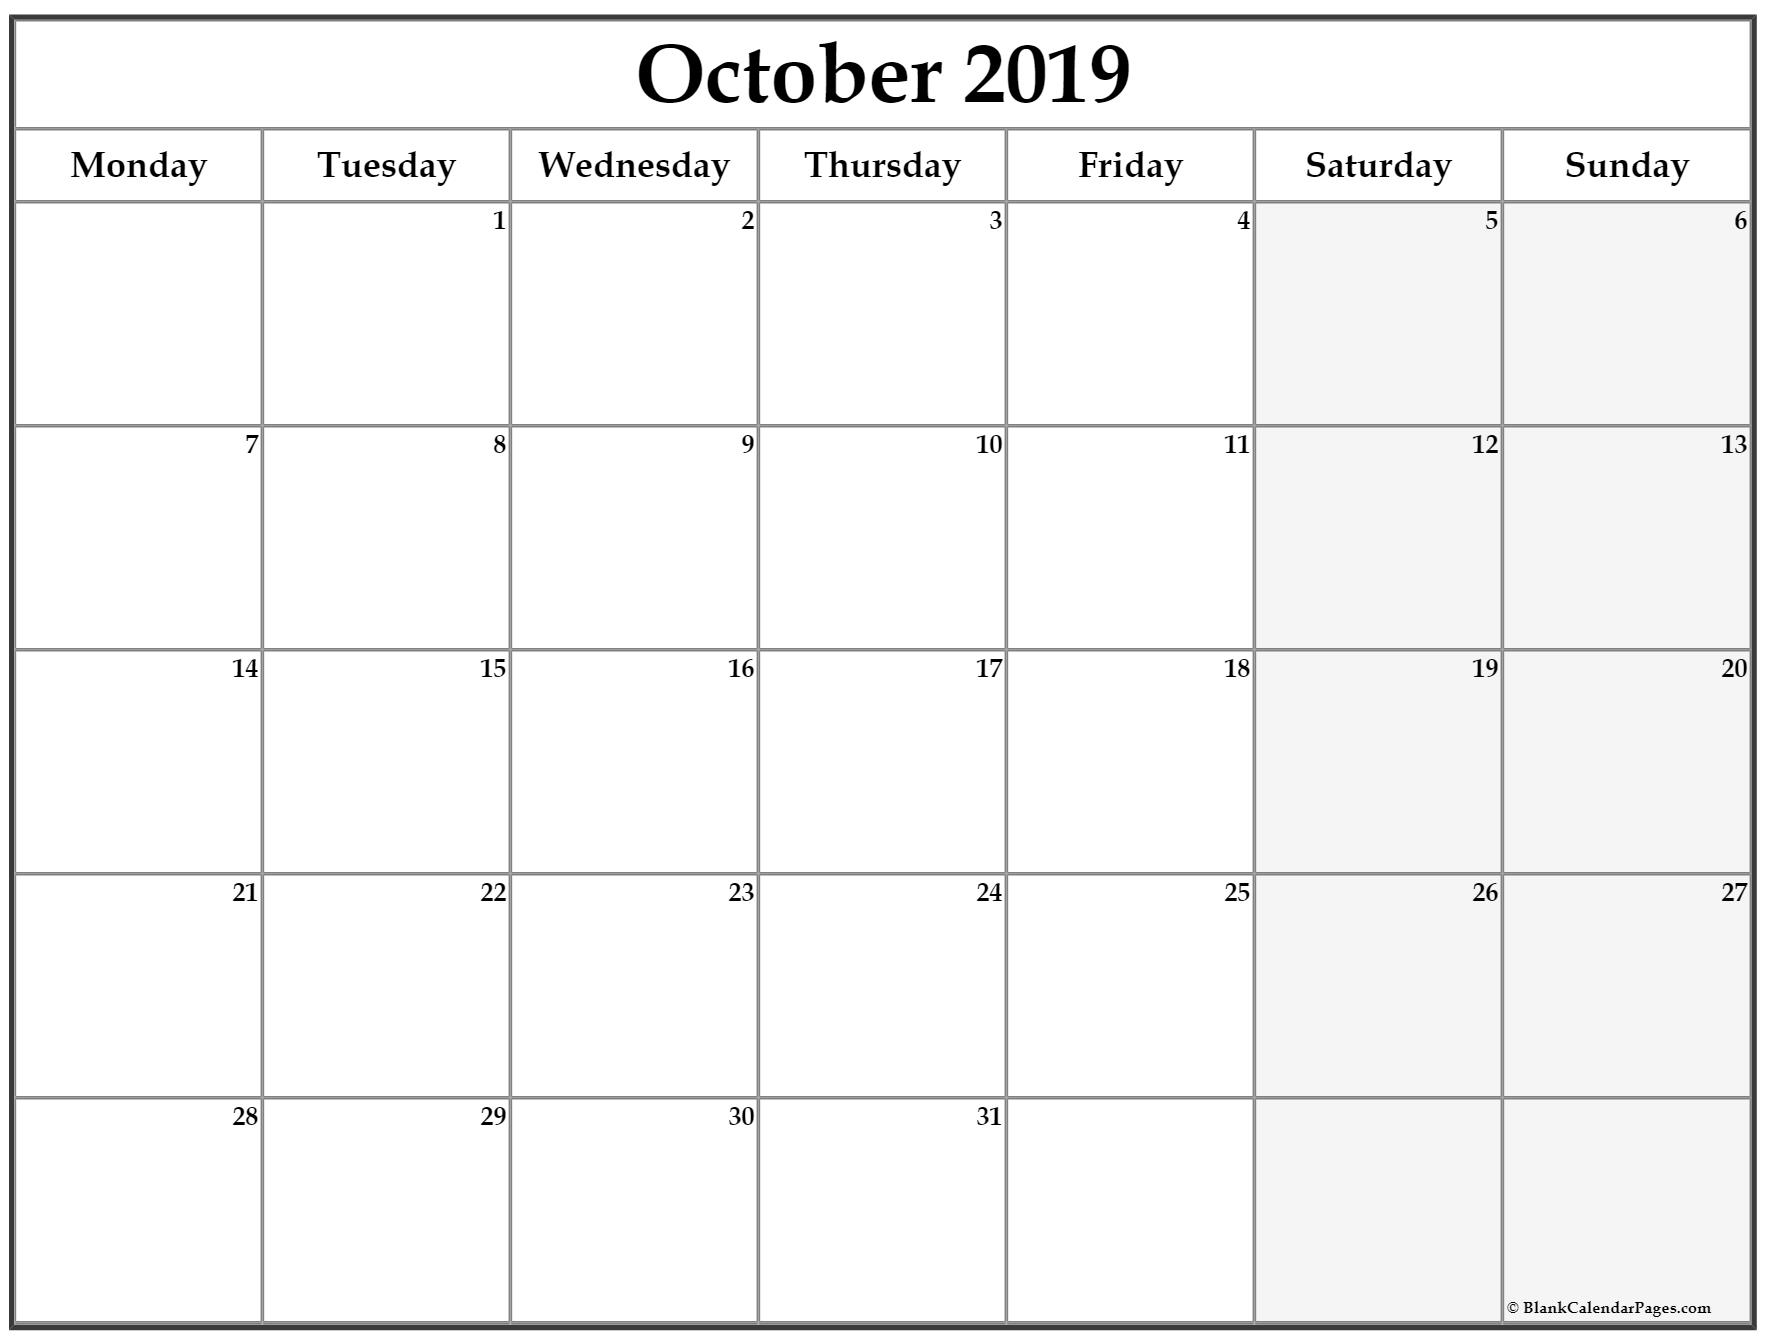 October 2019 Monday Calendar | Monday To Sunday